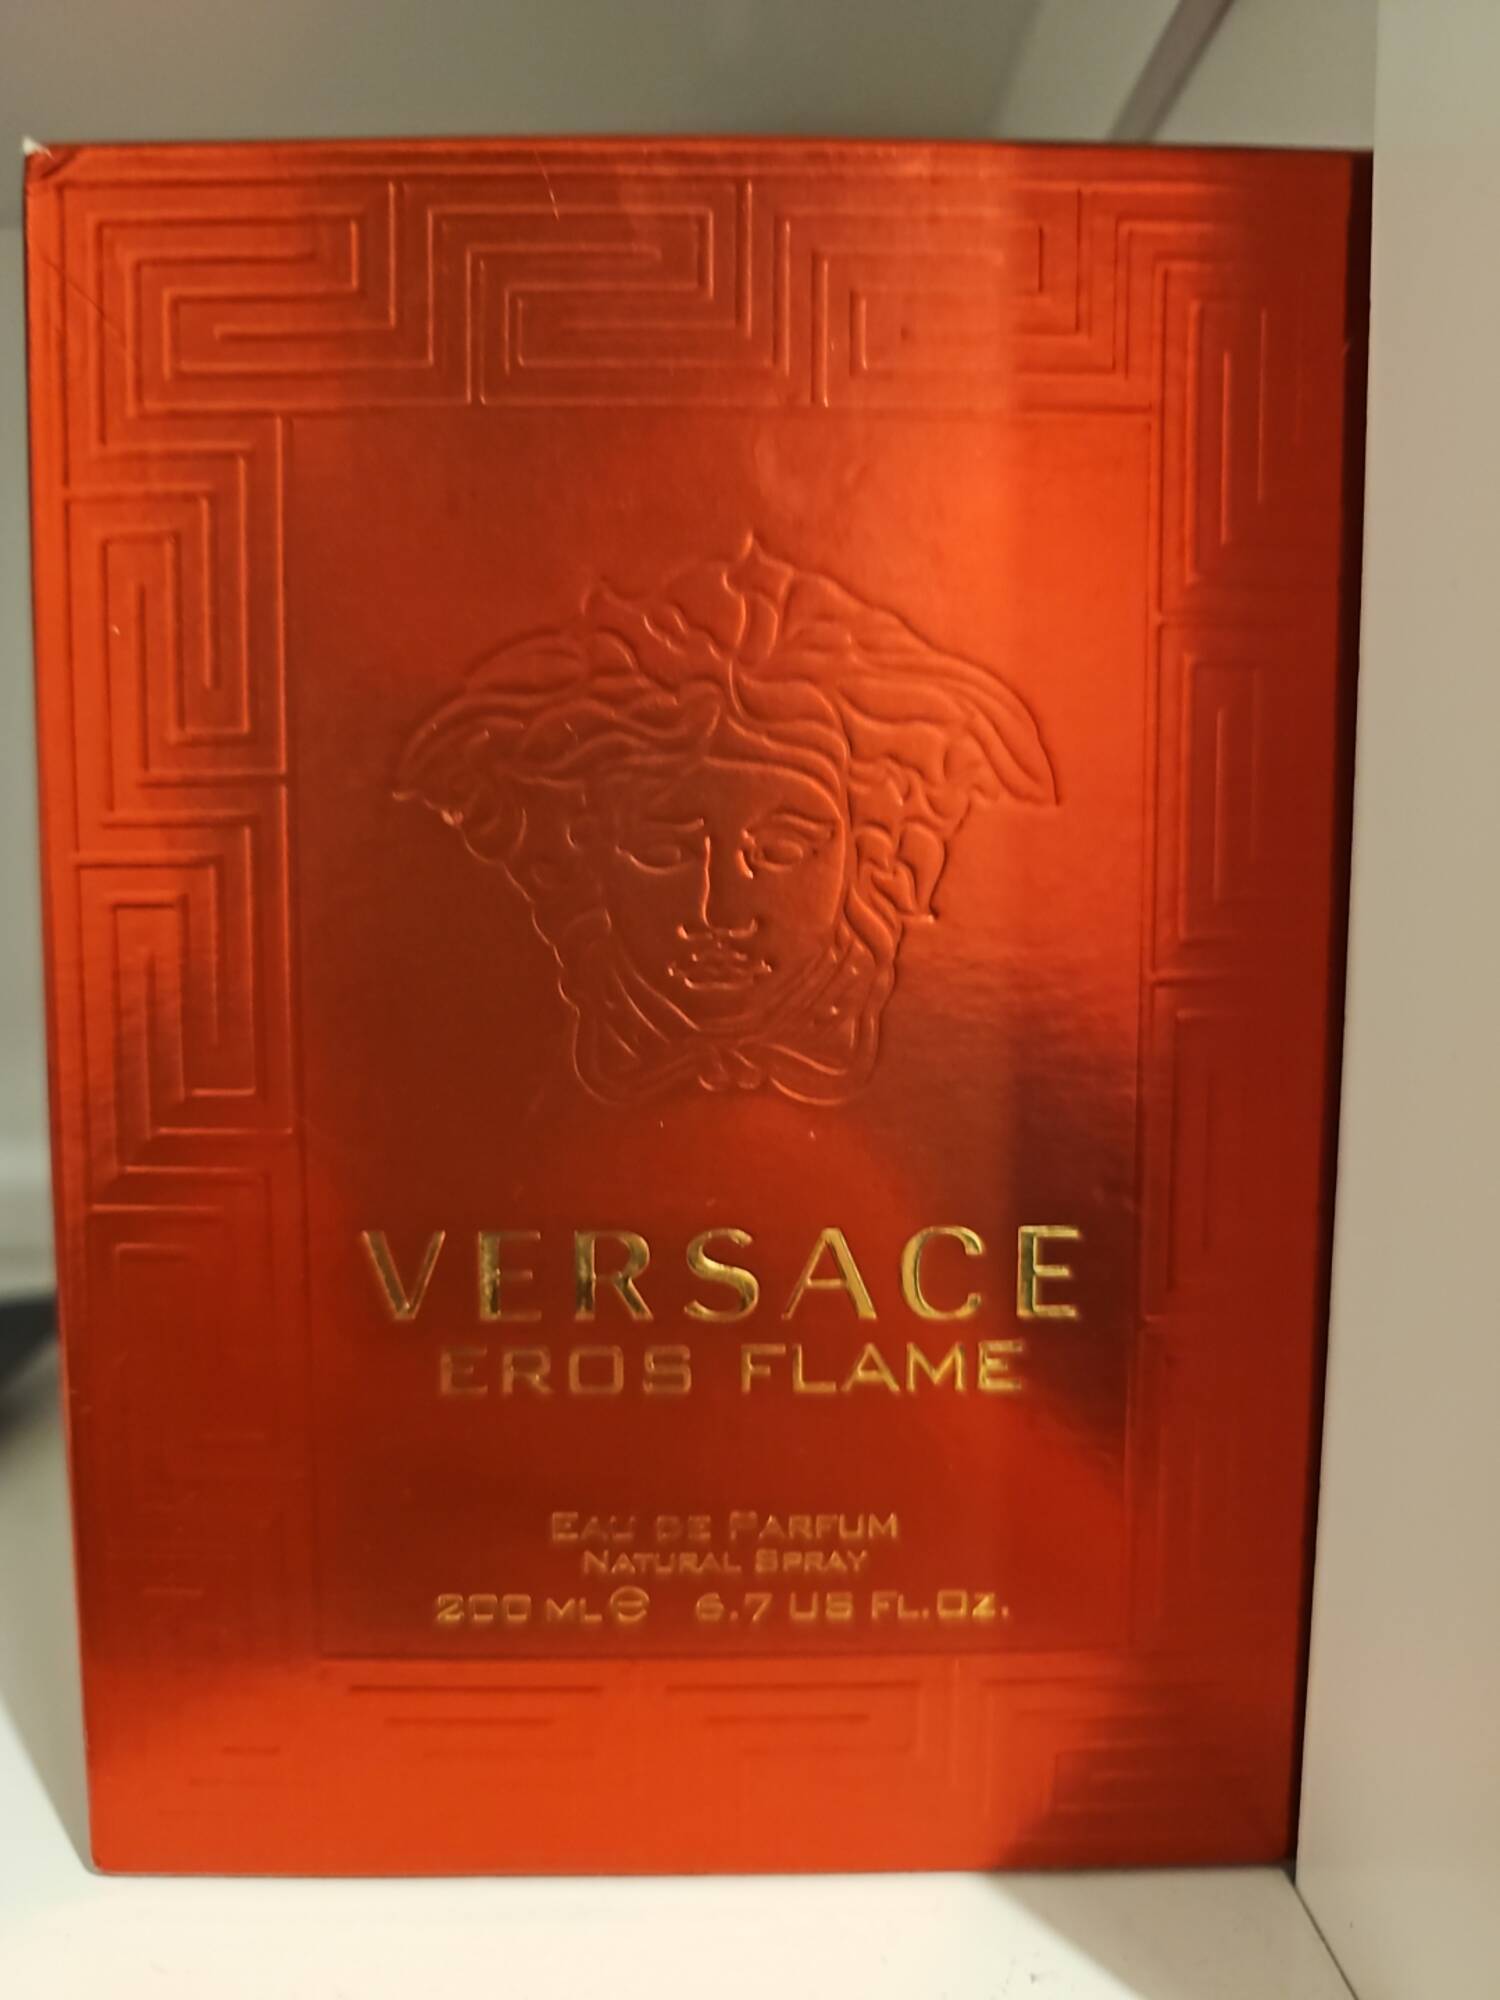 VERSACE - Eros Flame - Eau de parfum